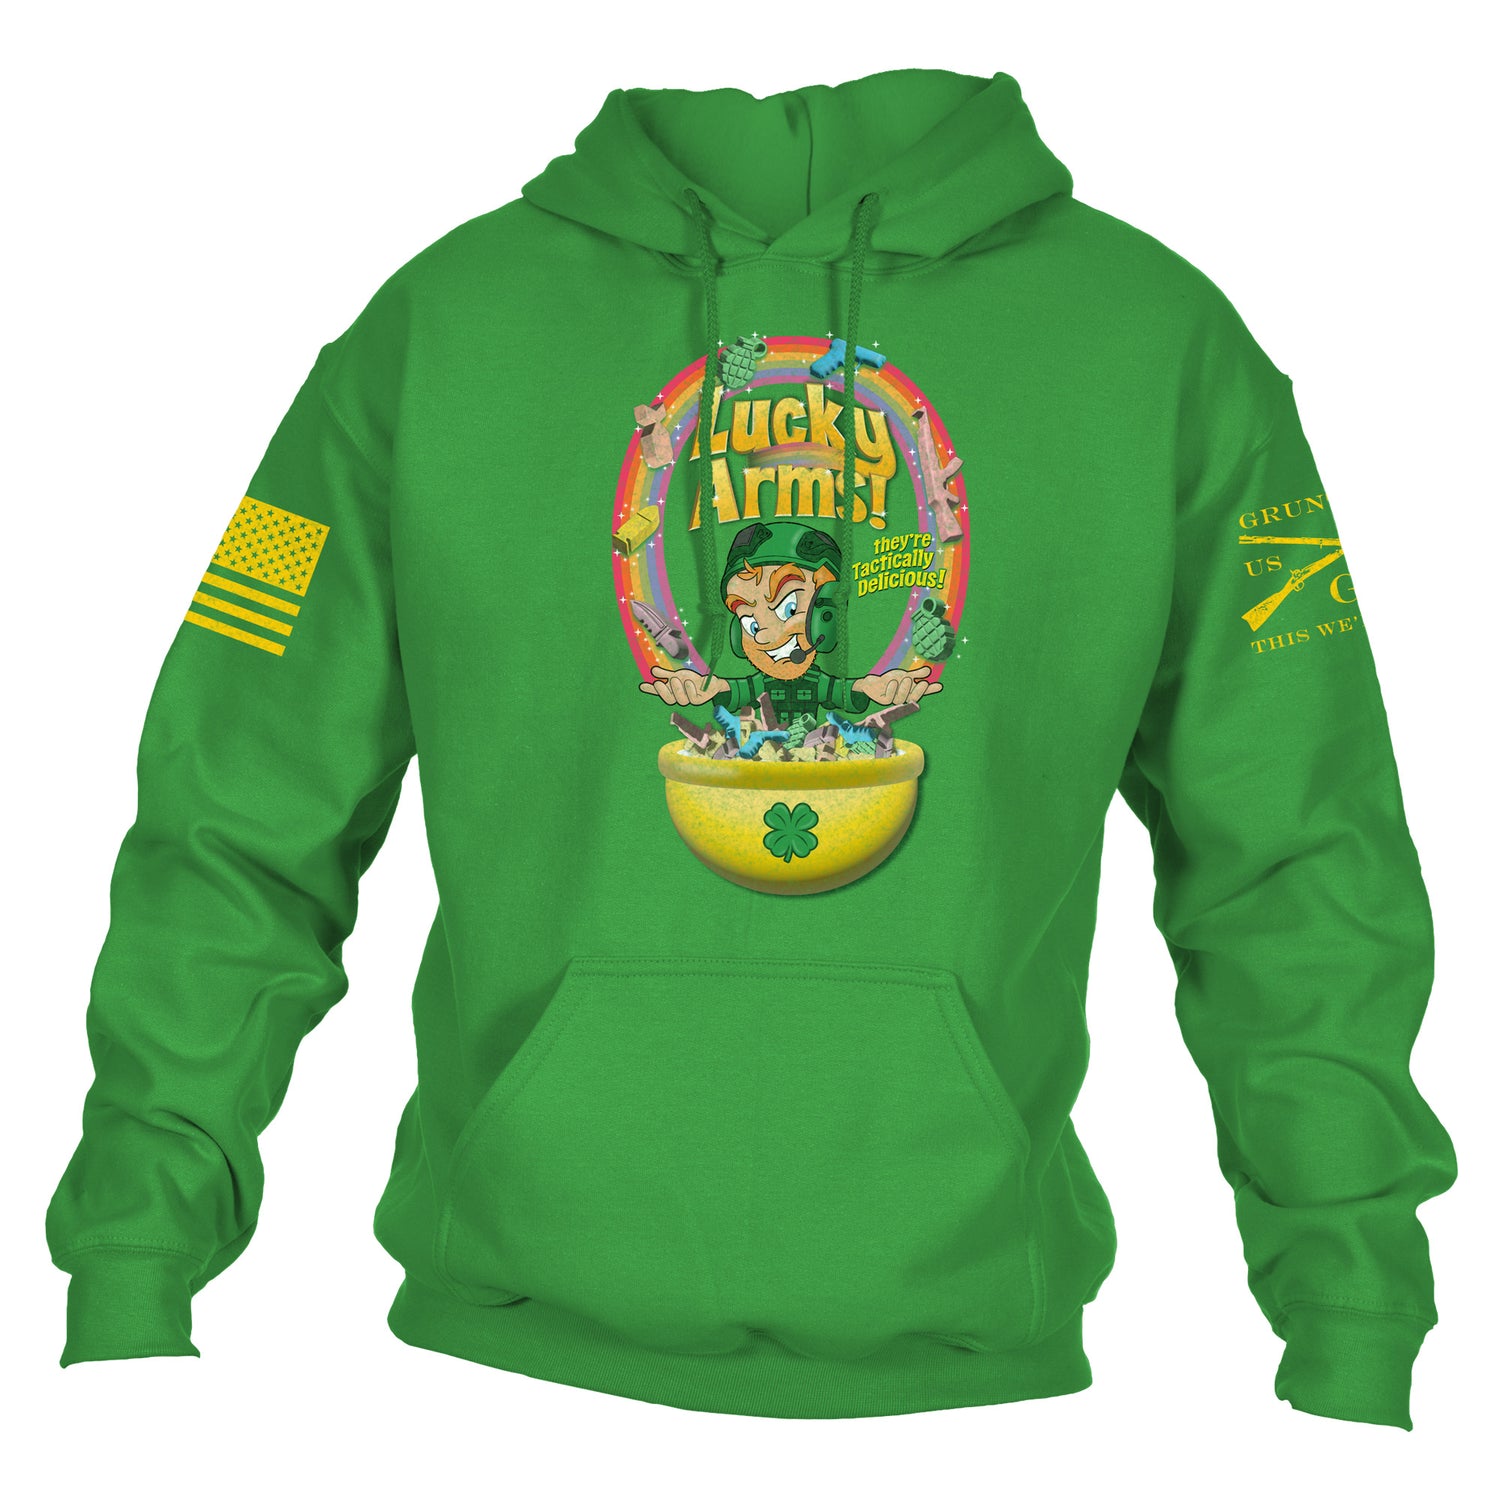 Irish-themed Hooded Sweatshirt